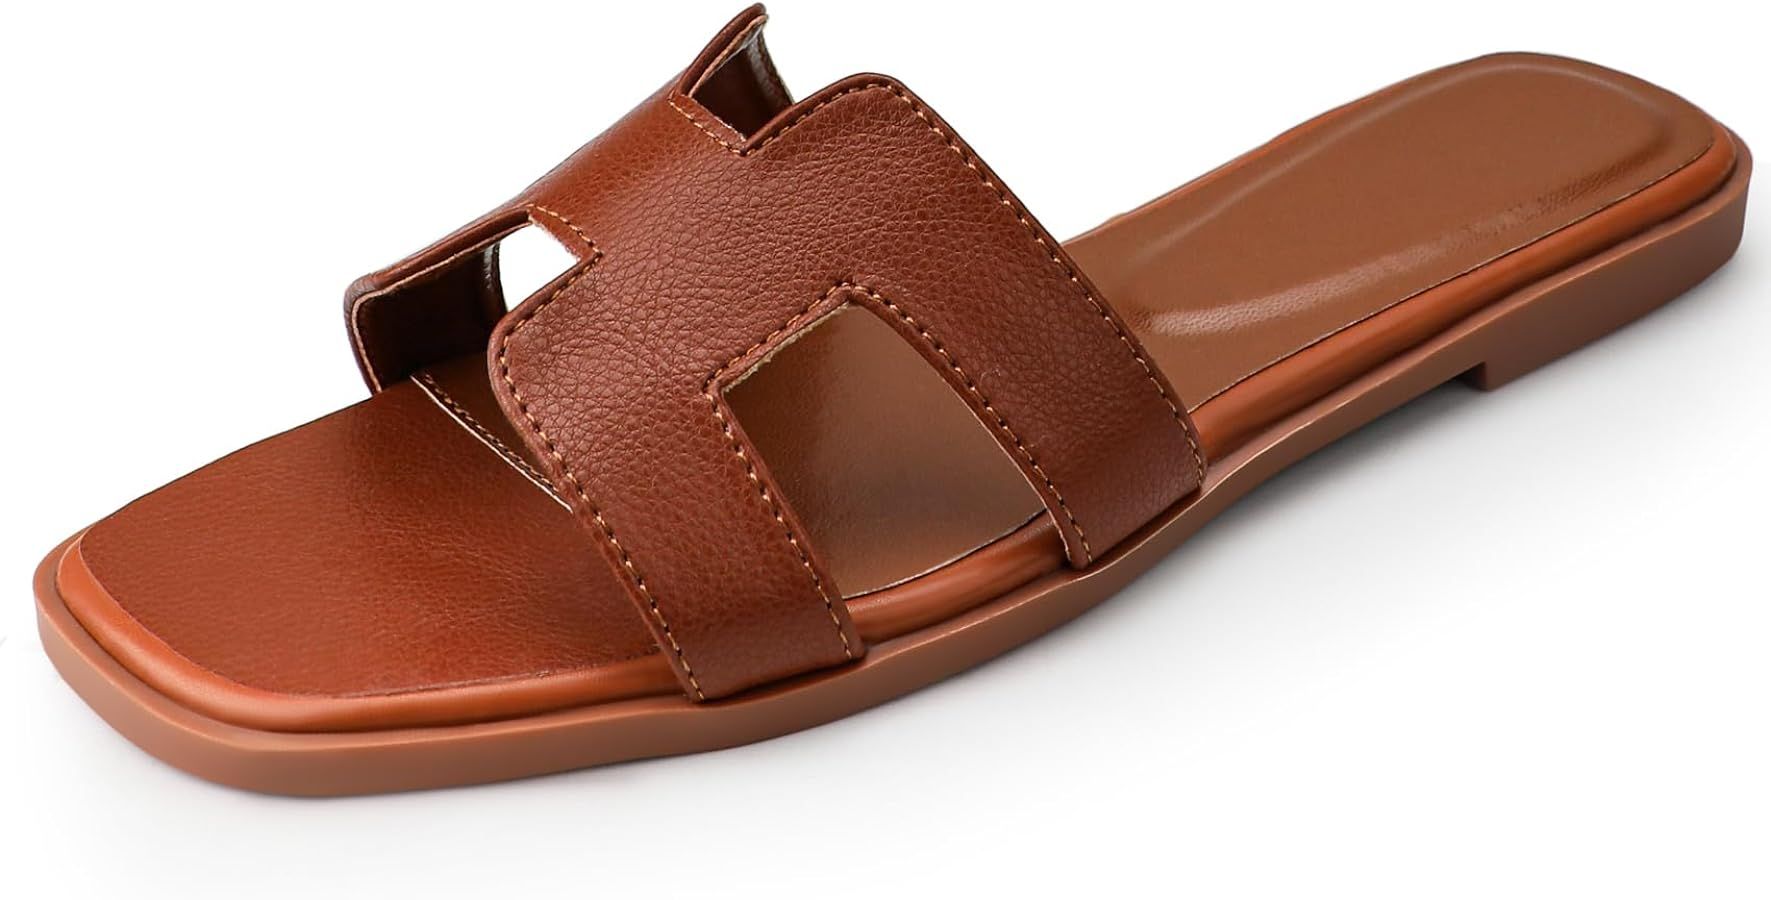 Womens Flat Sandals,Anti slip fashion sandals,Flat Slide Sandals,Comfy Style,women's gift | Amazon (US)